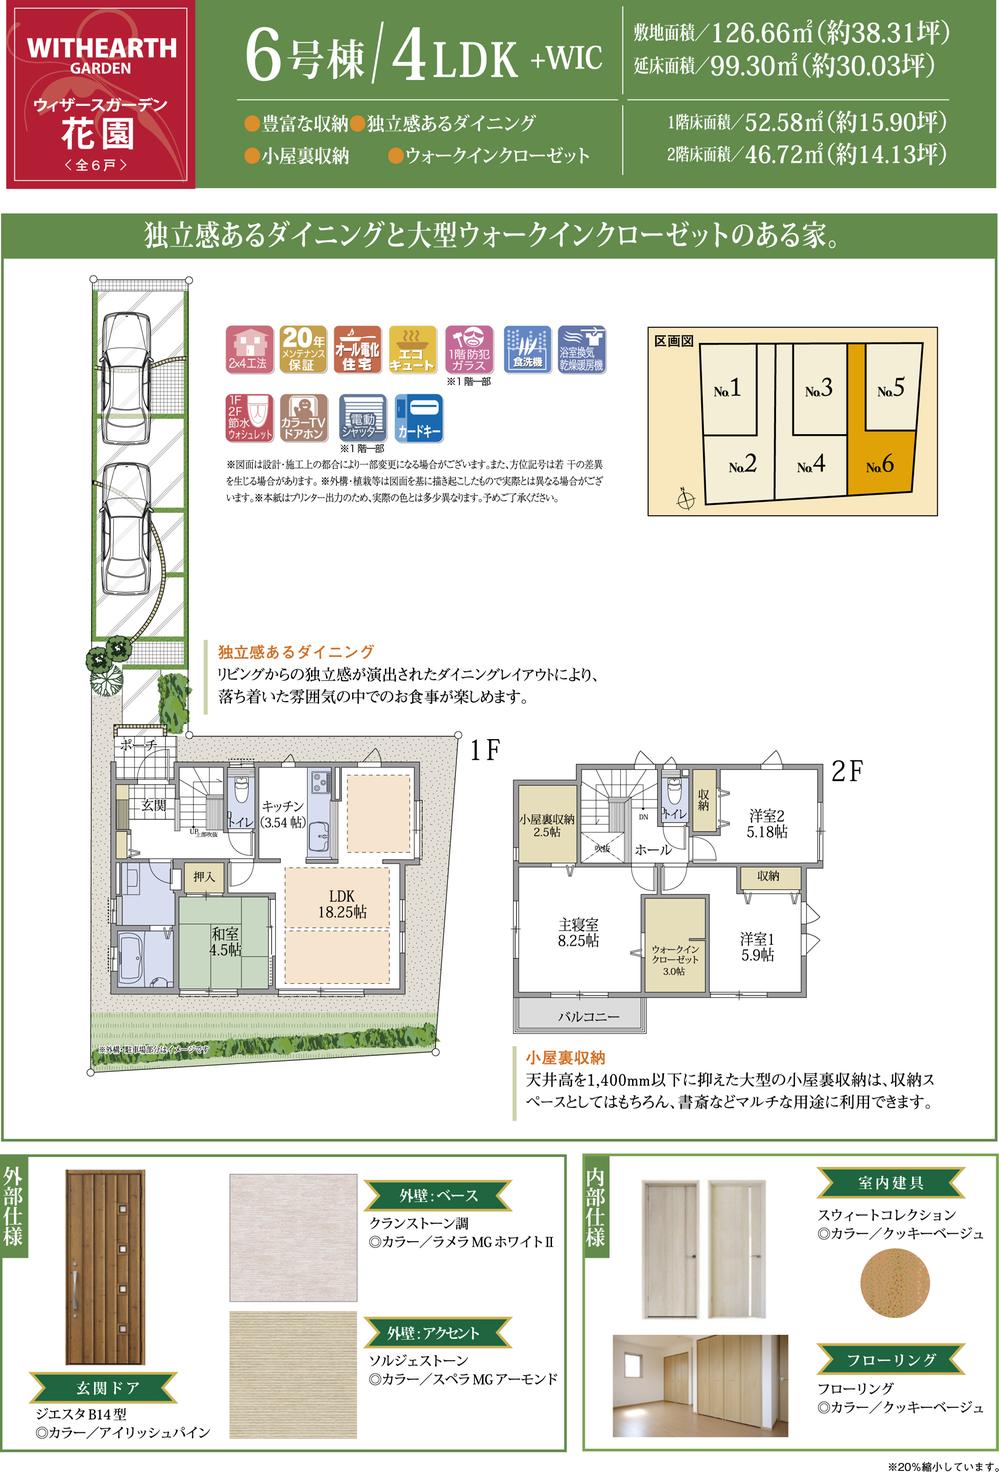 Floor plan. (6 Building), Price 34,900,000 yen, 4LDK, Land area 126.66 sq m , Building area 99.3 sq m